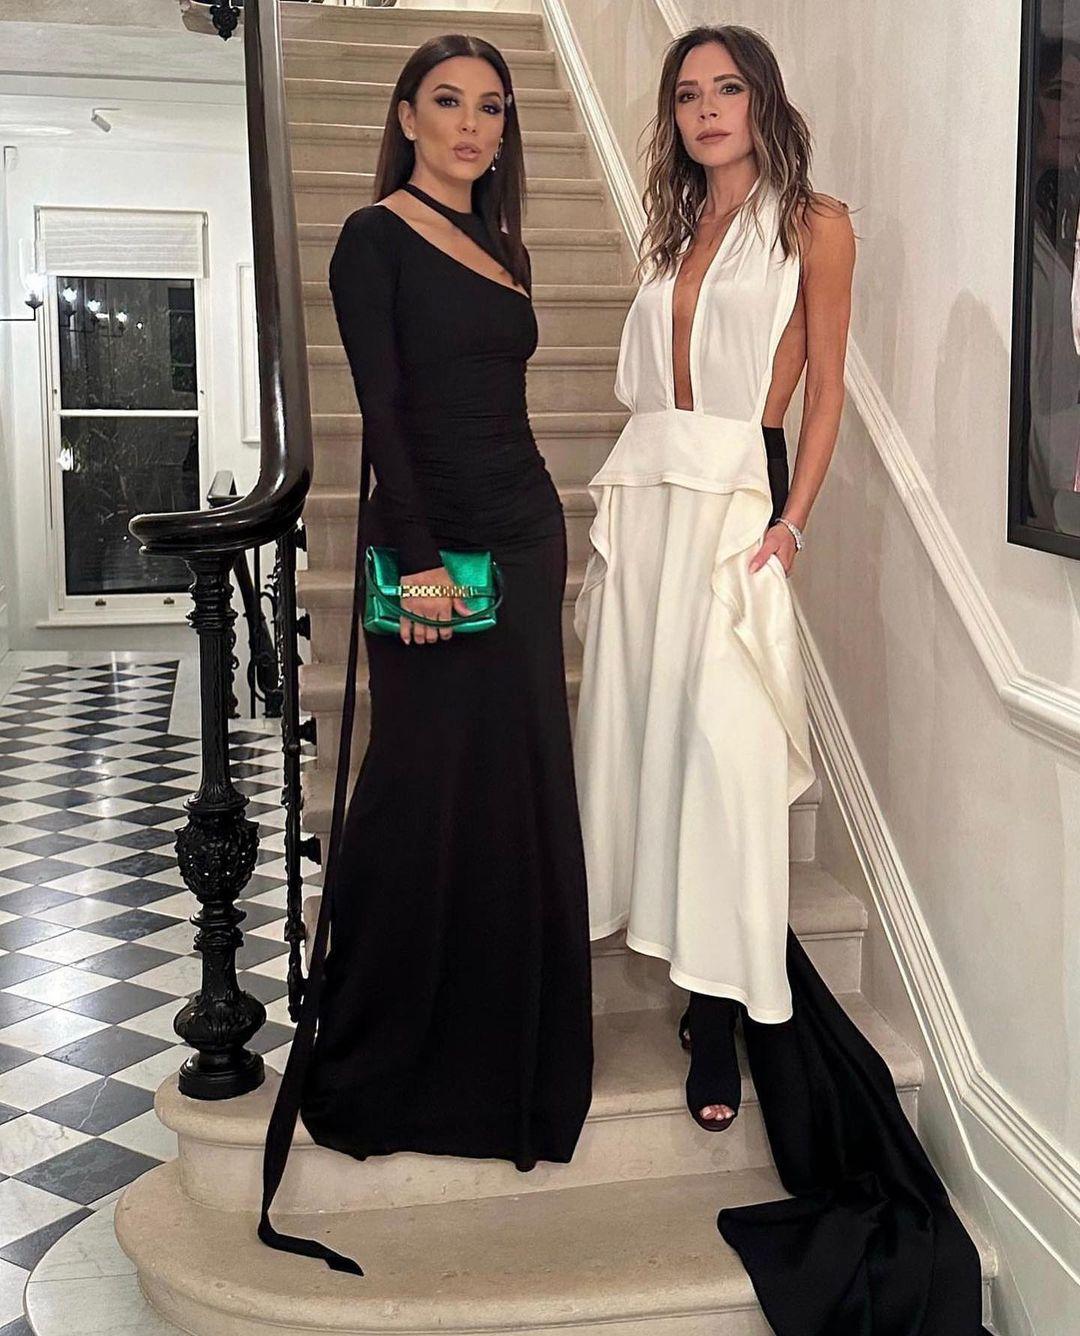 Eva Longoria and Victoria-Beckham's girls' night out